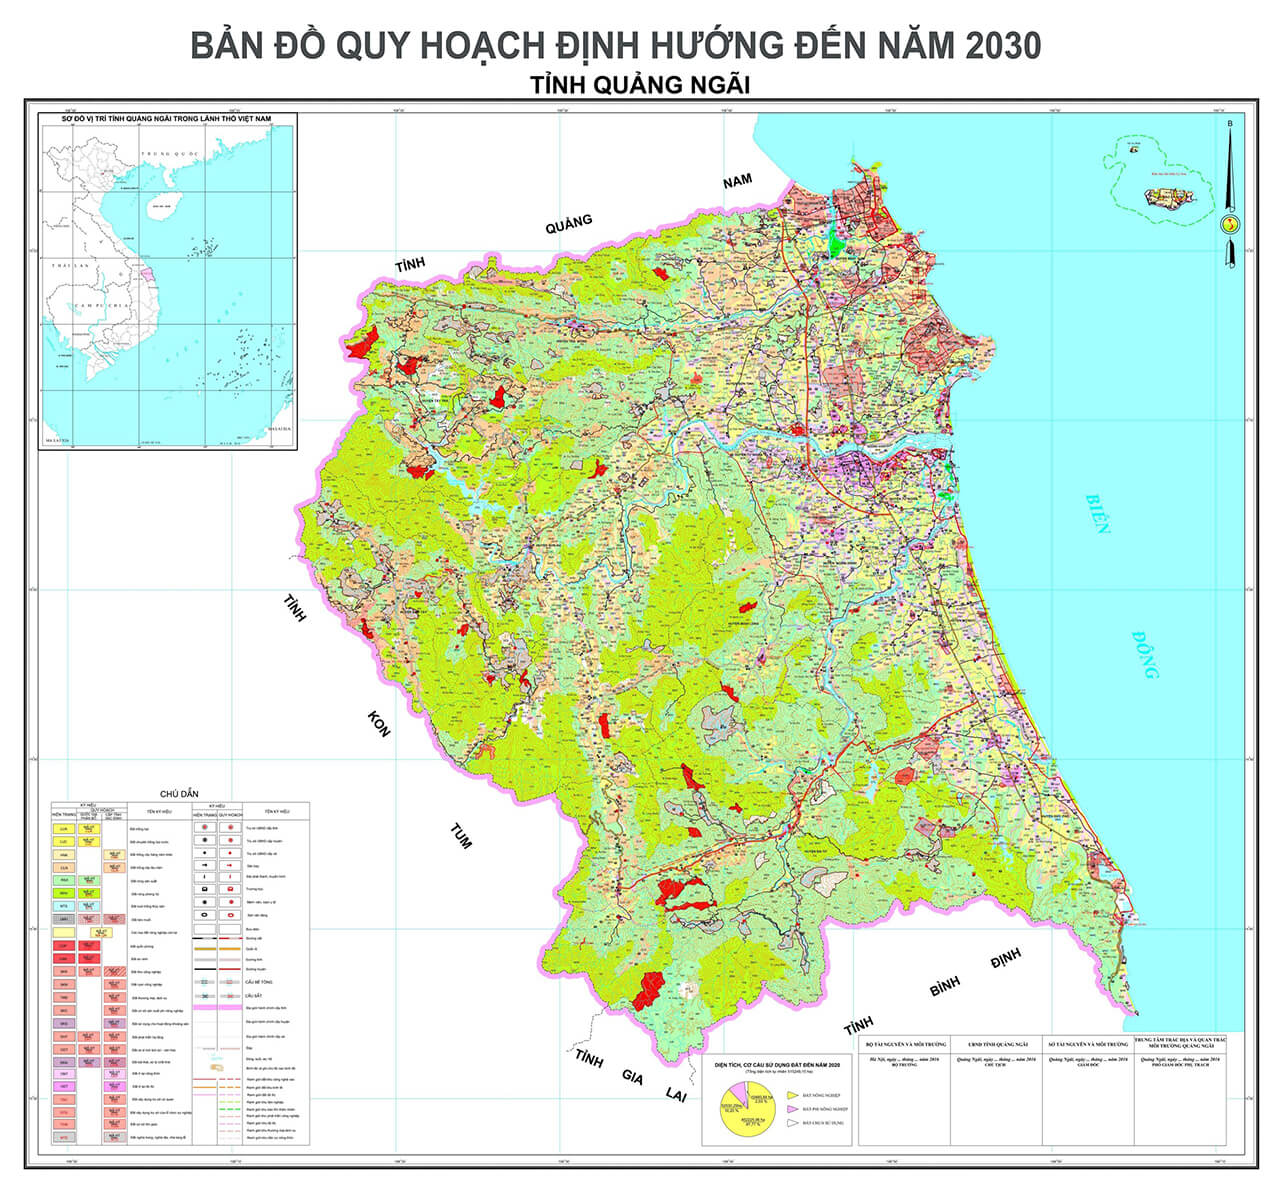 ban-do-quy-hoach-huyen-ba-to-tinh-quang-ngai-den-nam-2030